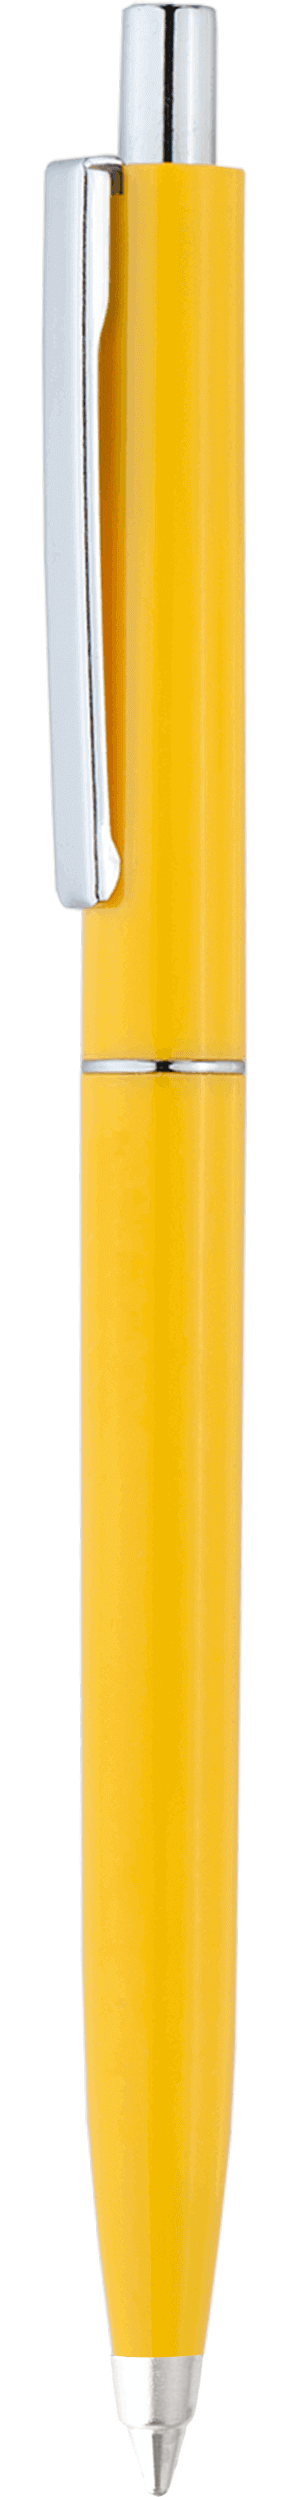 Ручка TOP NEW, жёлтая